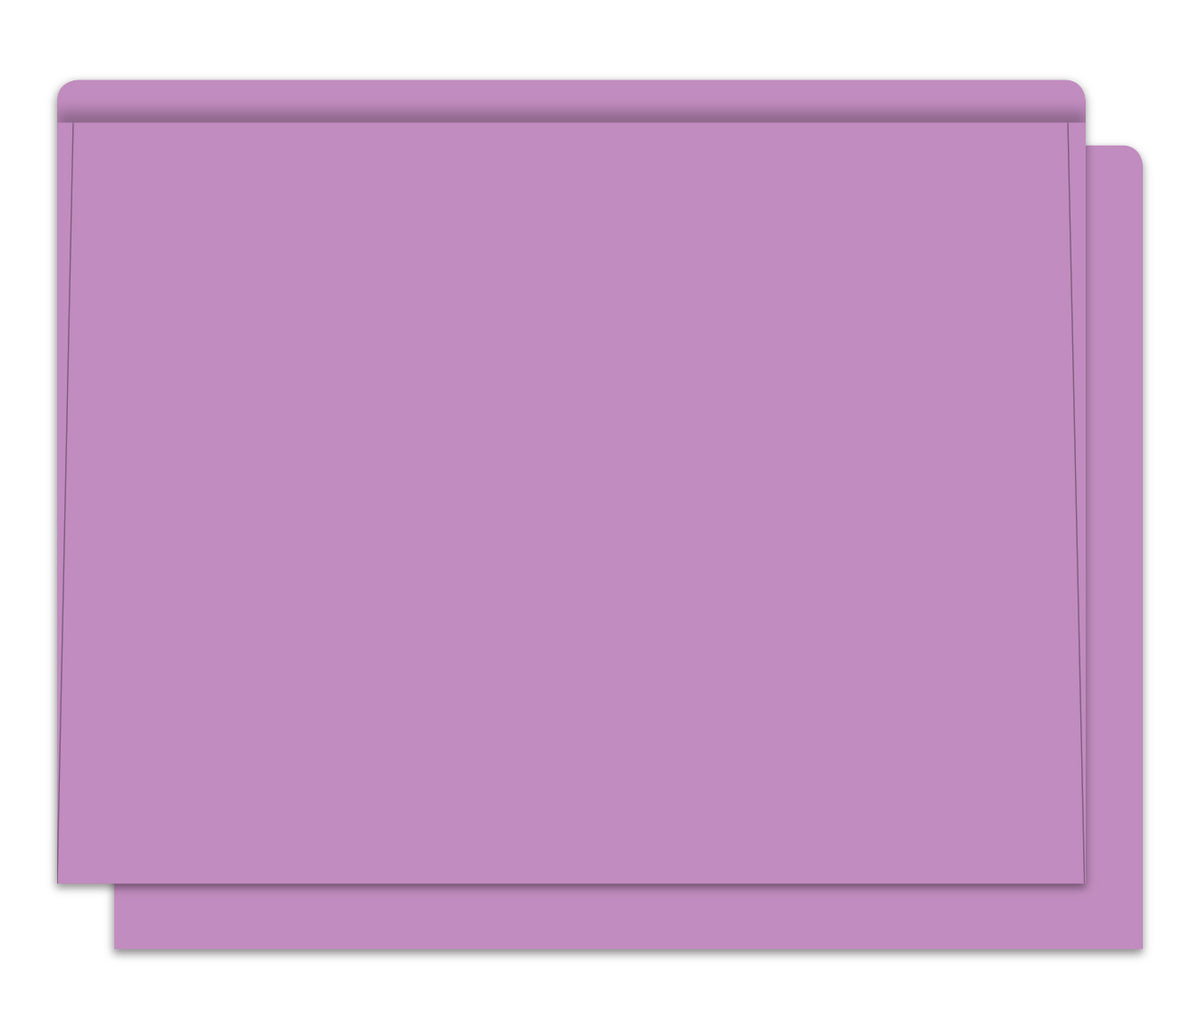 Heavy Duty Deal Envelopes (Jackets) Plain in Lavender [Packs of 100]; image is a plain, lavender colored deal jacket. www.flywheelnw.com